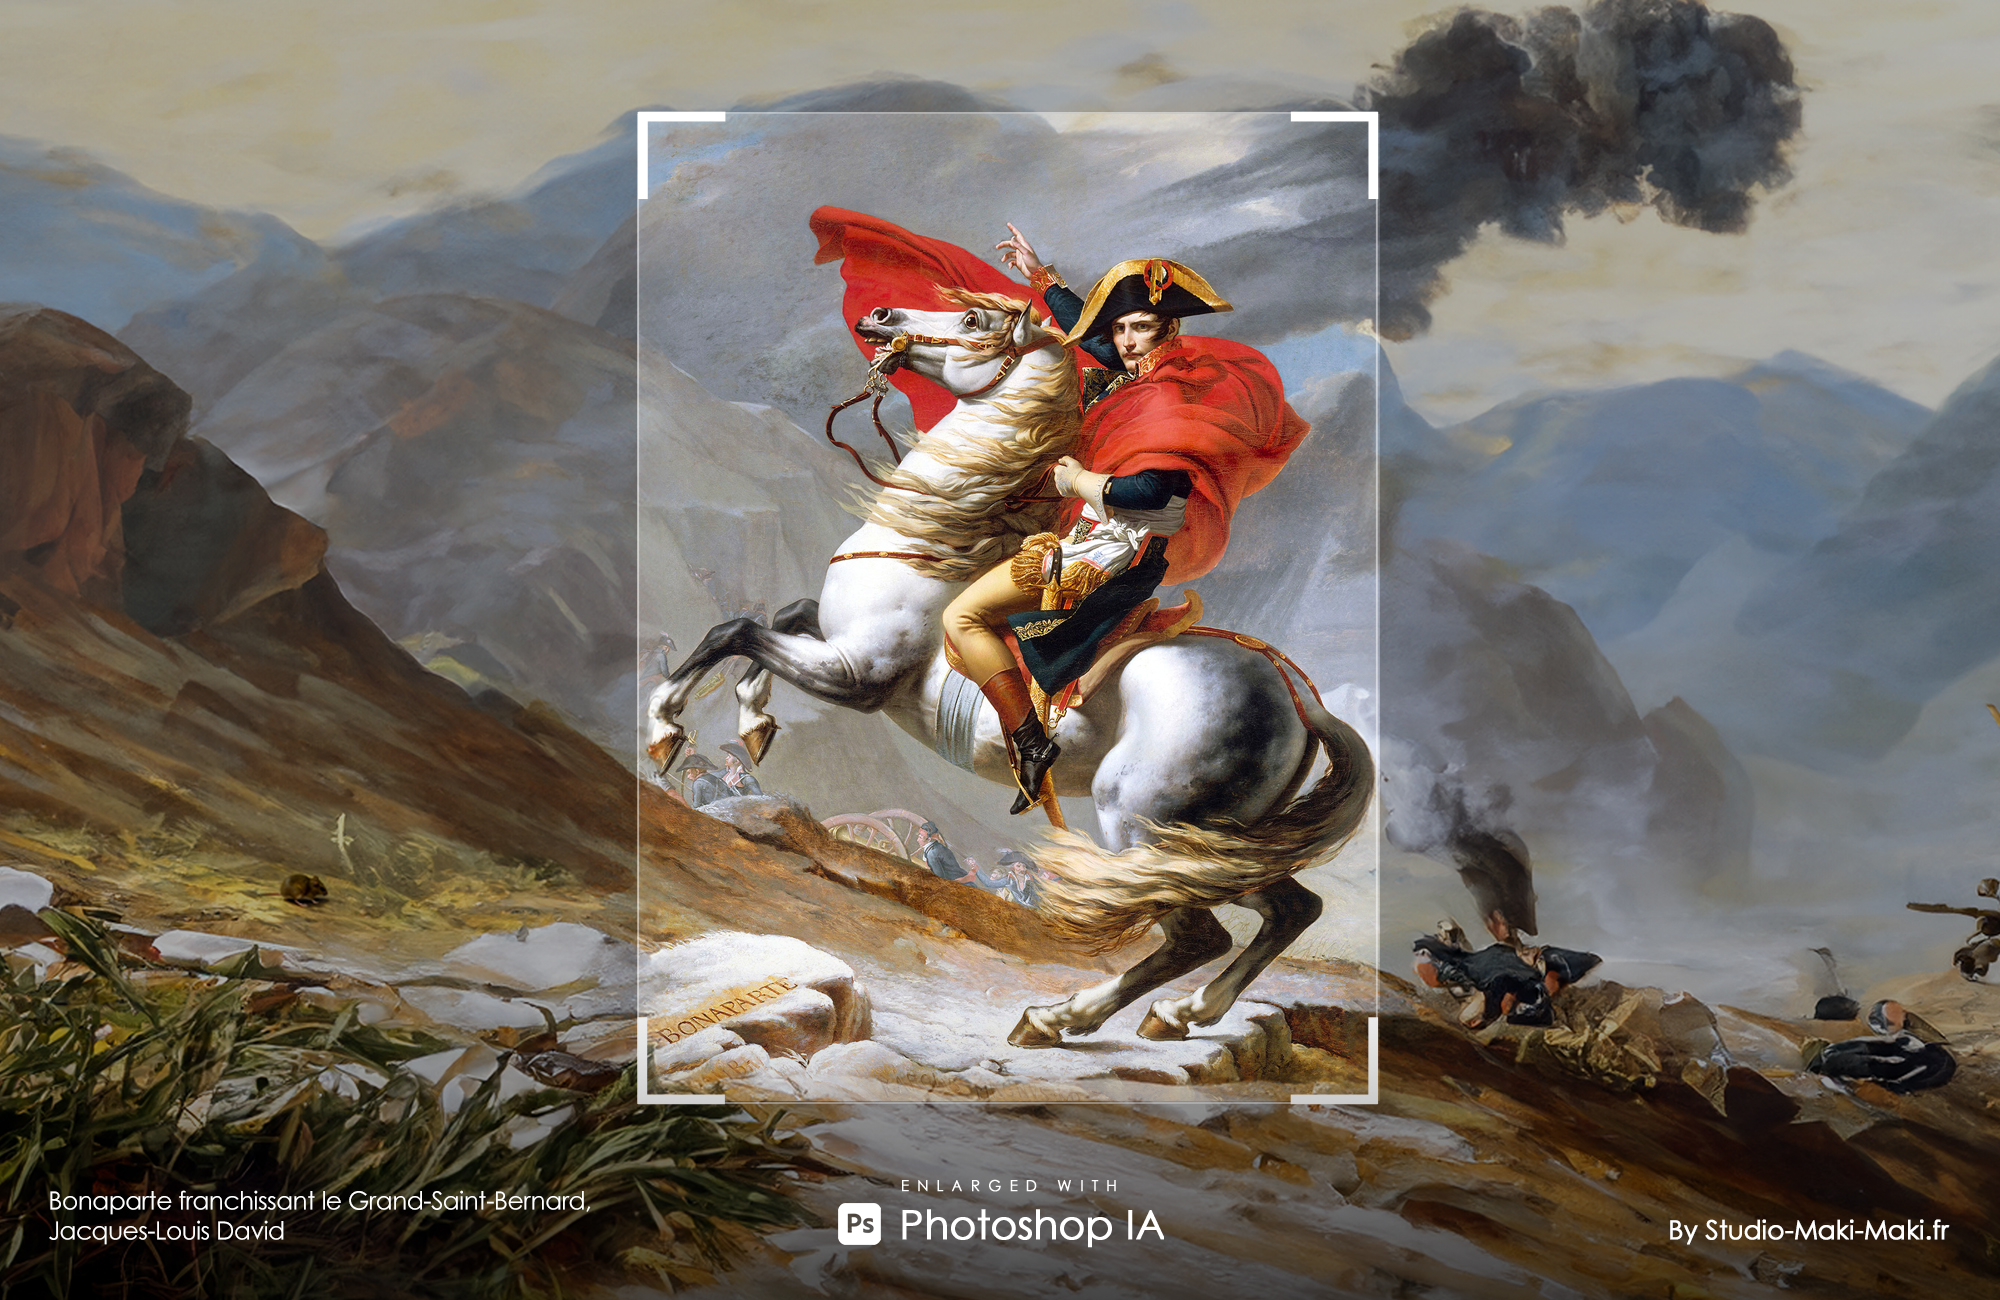 Bonaparte franchissant le Grand-Saint-Bernard, Jacques-Louis David - Enlarged with Photoshop IA - By Studio Maki Maki